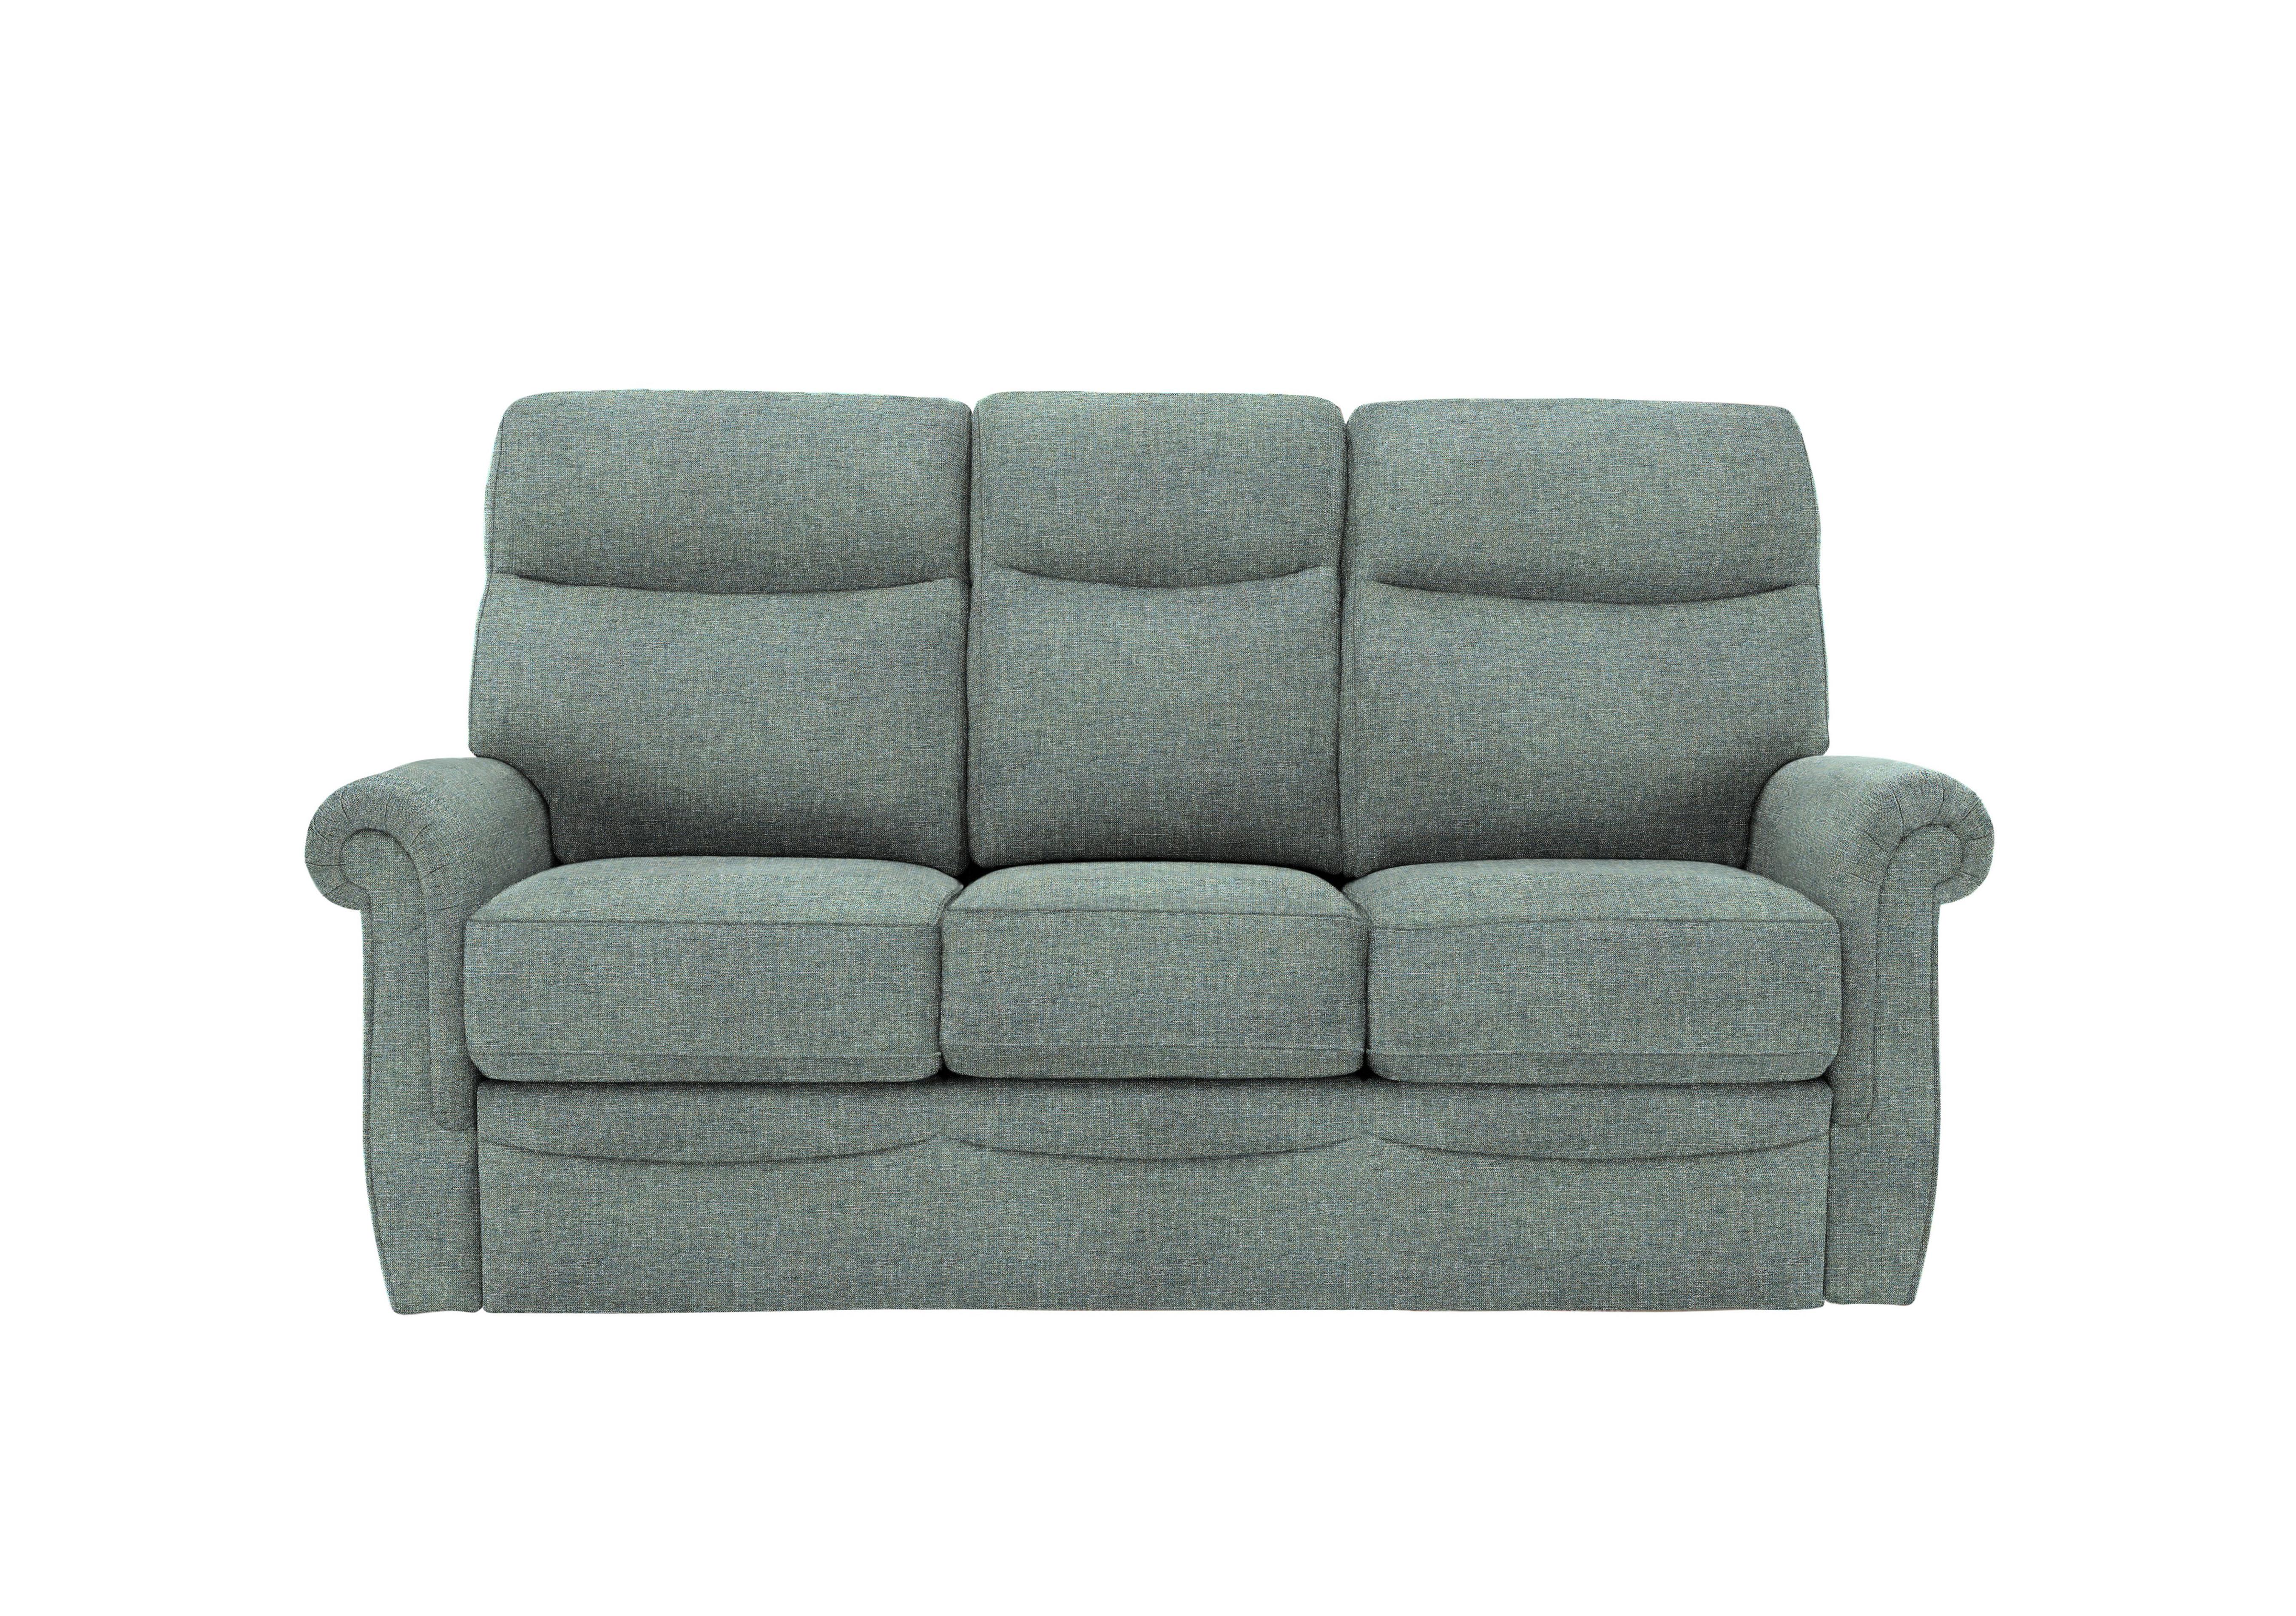 Avon Small 3 Seater Fabric Sofa in A020 Dapple Kingfisher on Furniture Village